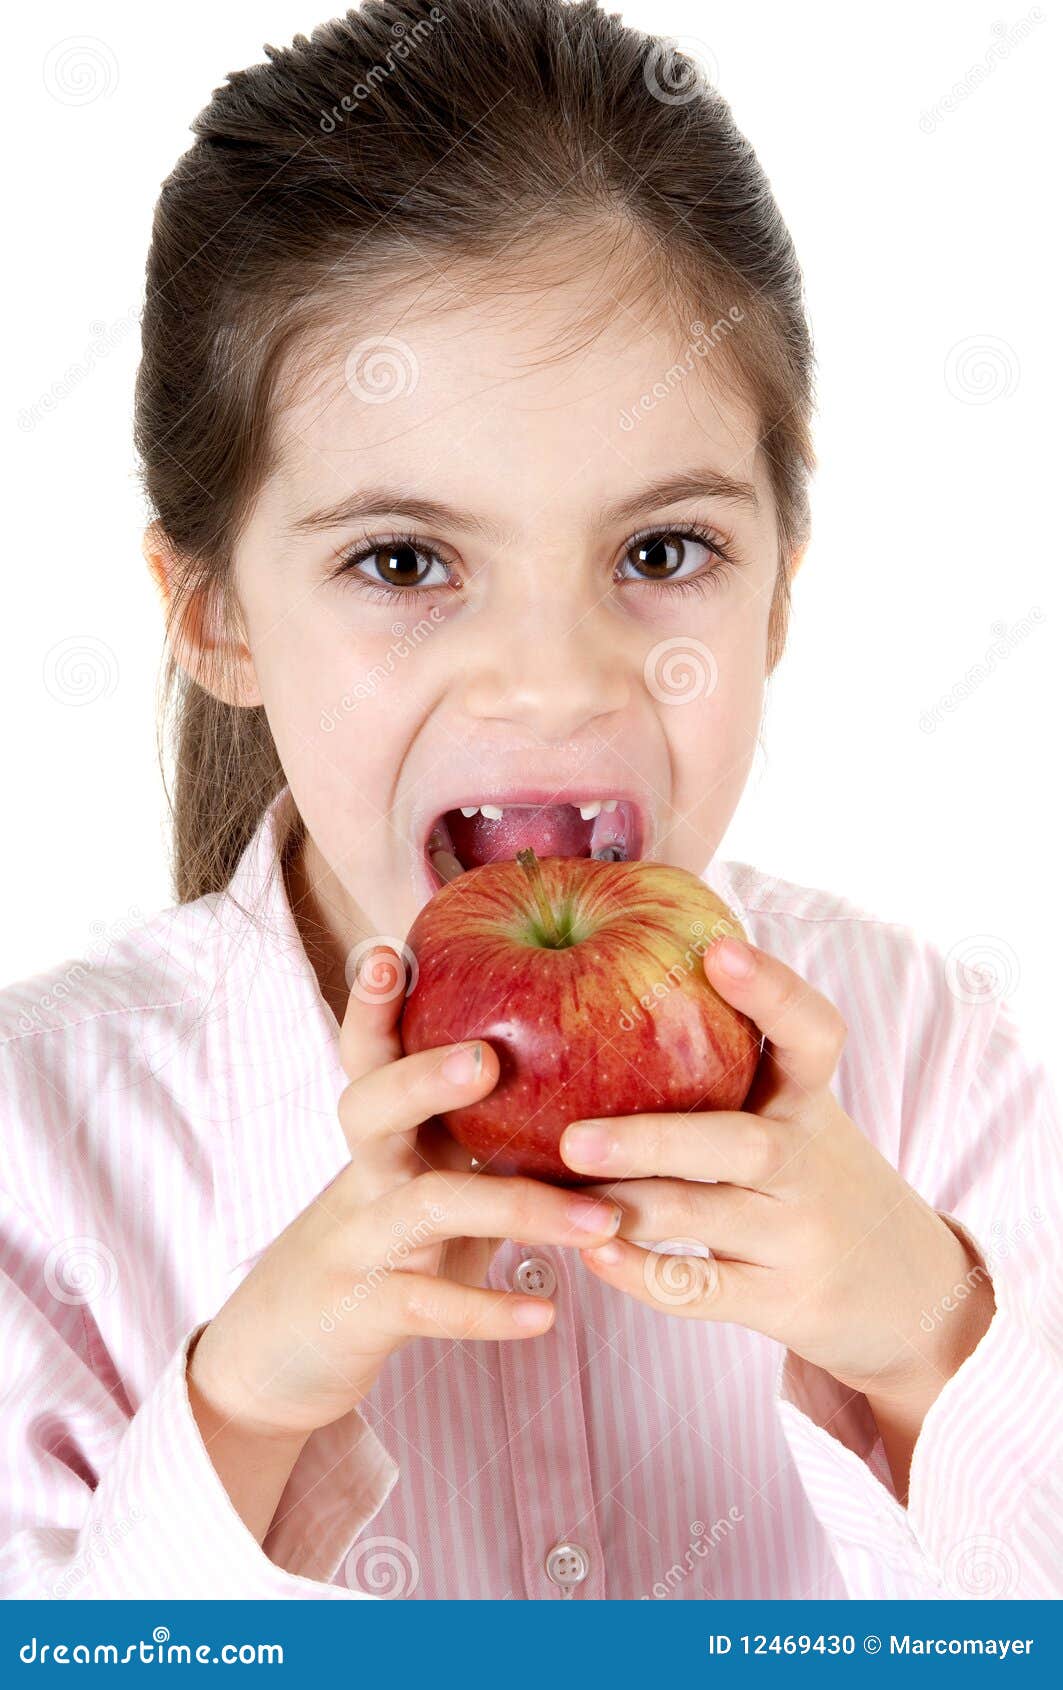 bambina che mangia una mela